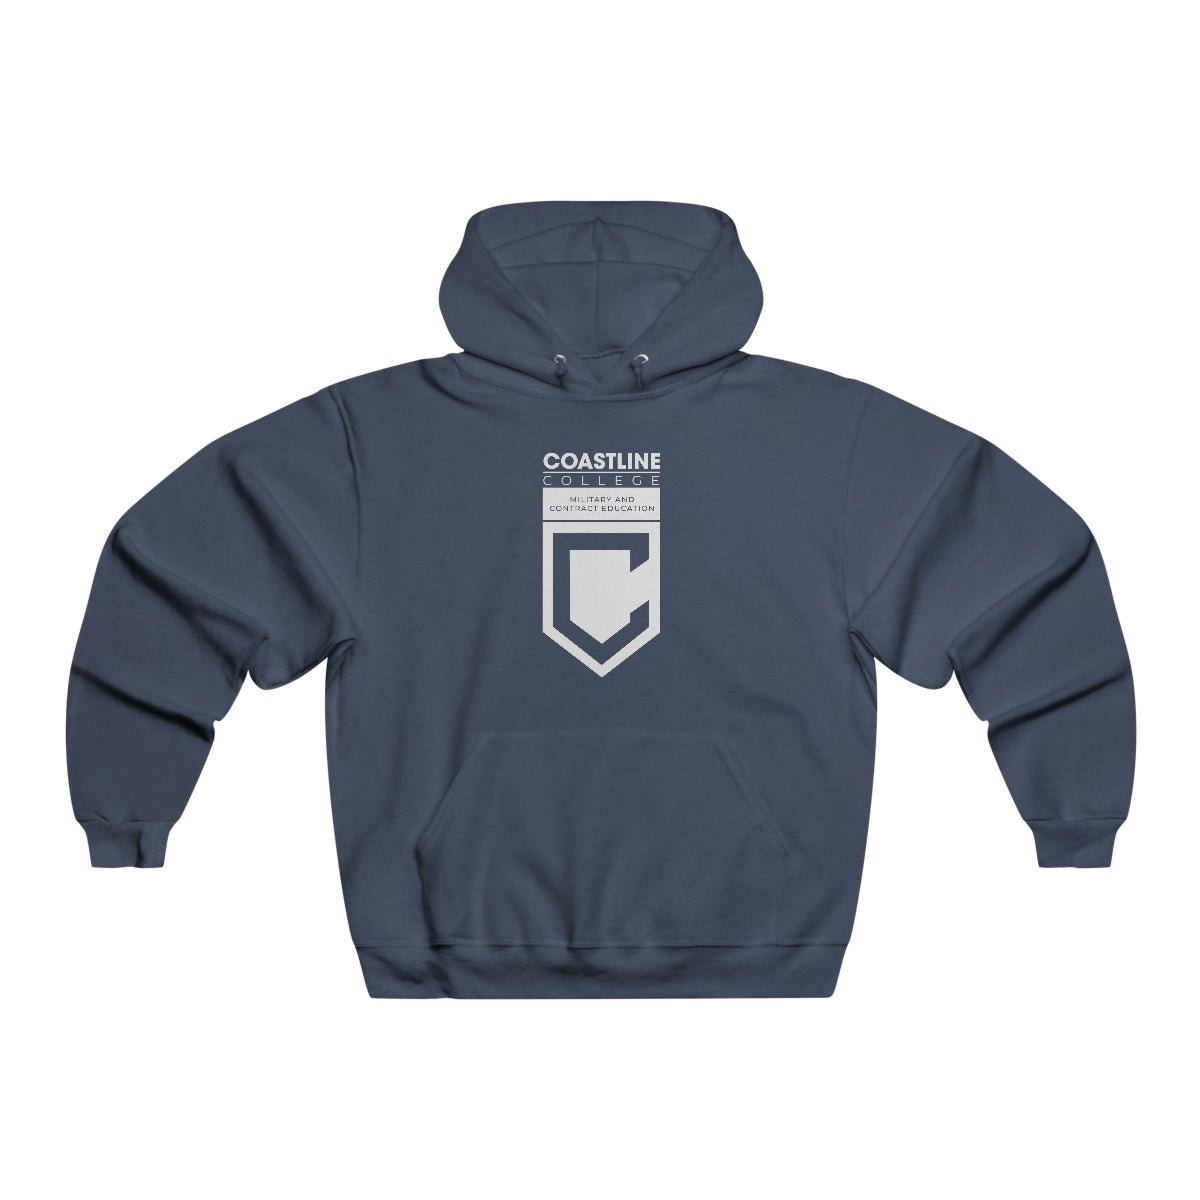 Coastline Military & Contract Ed Men's NUBLEND® Hooded Sweatshirt